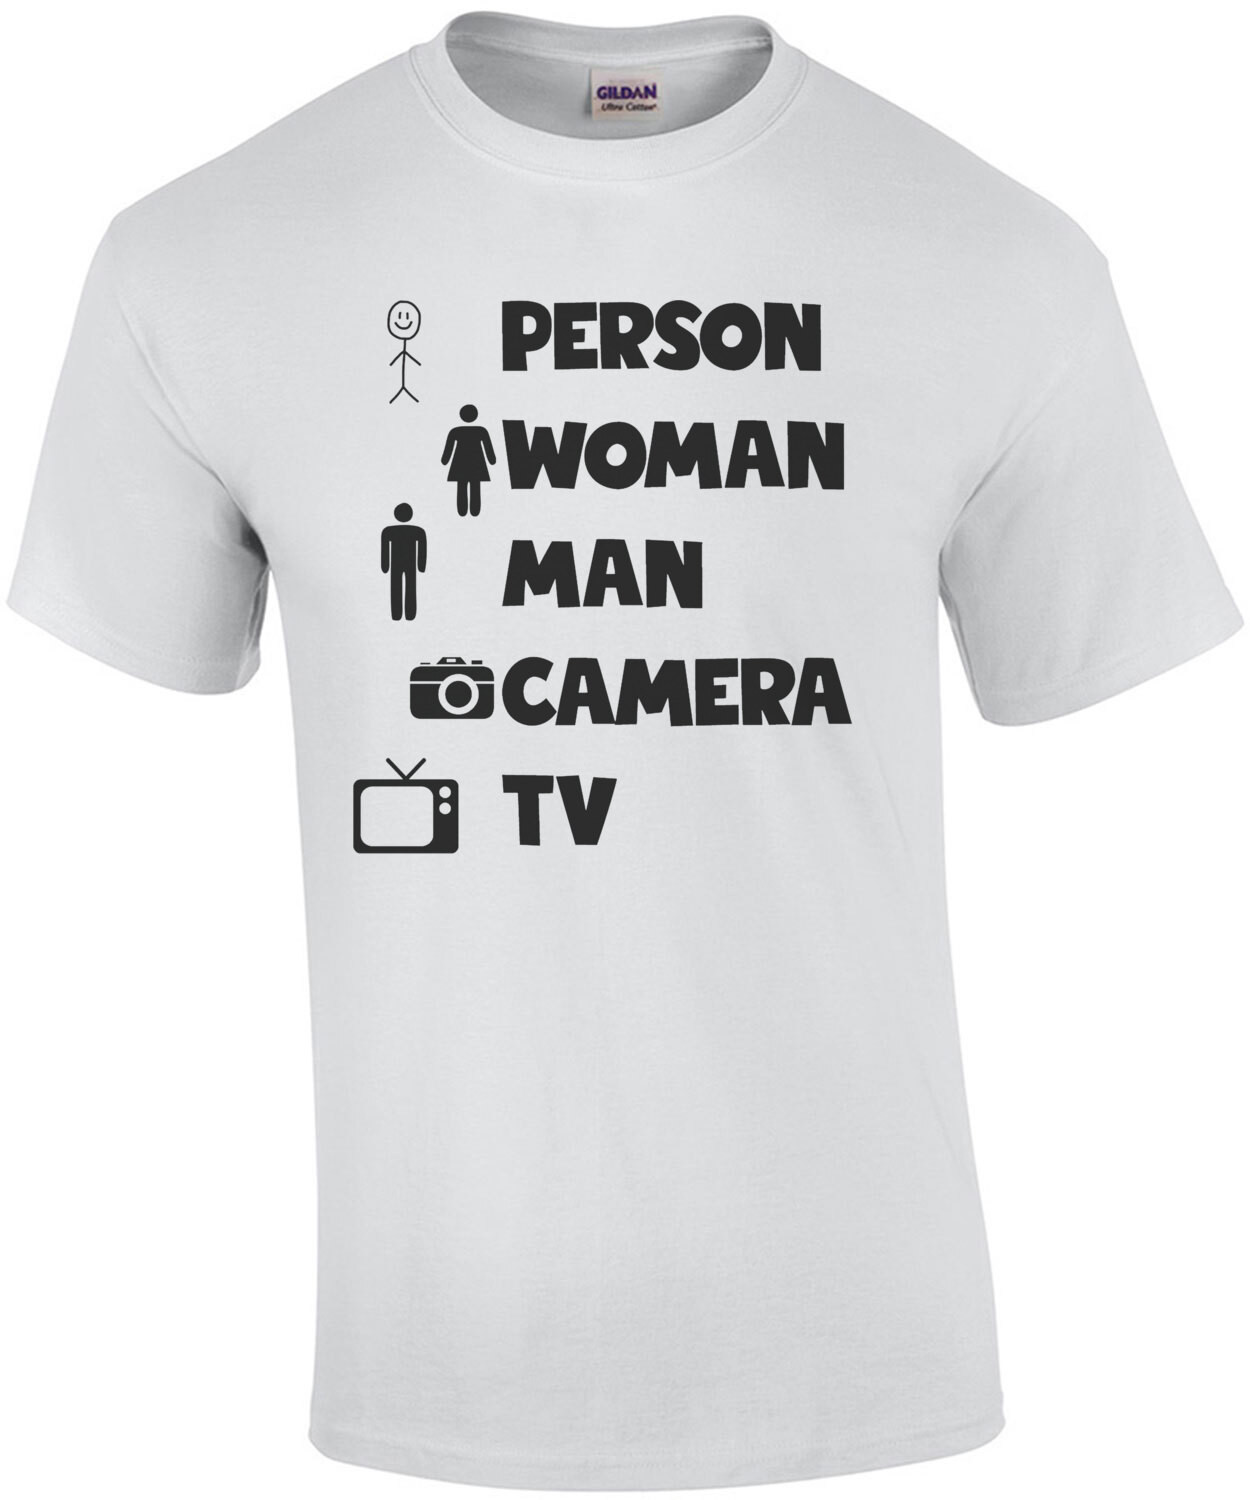 Person, Woman, Man, Camera, TV Funny Donald Trump Tee